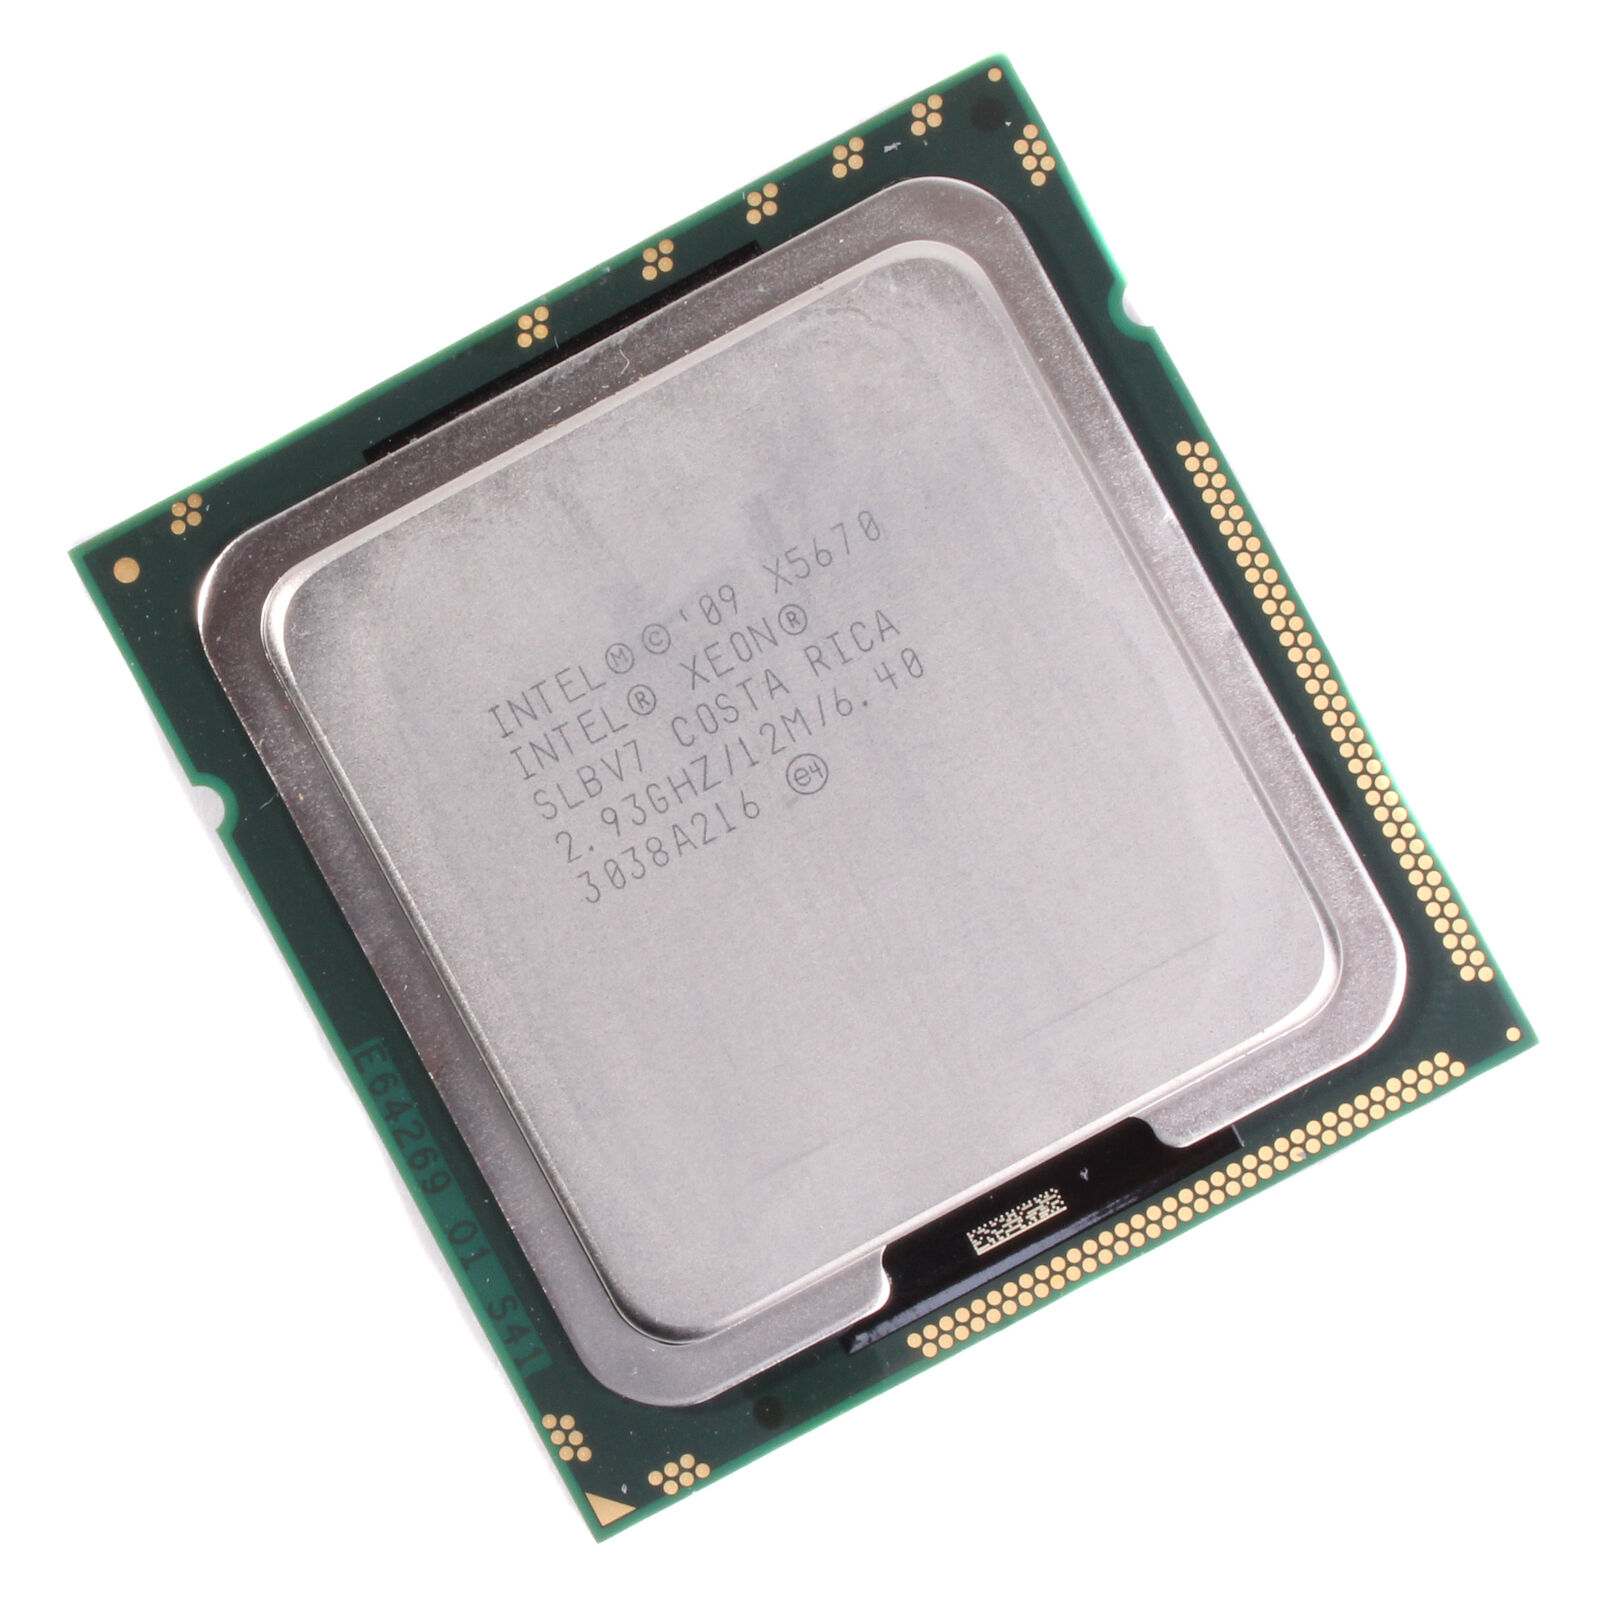 Intel Xeon CPU X5670 2.93GHz 12MB Cache Hexa Core Socket LGA1366 Processor SLBV7